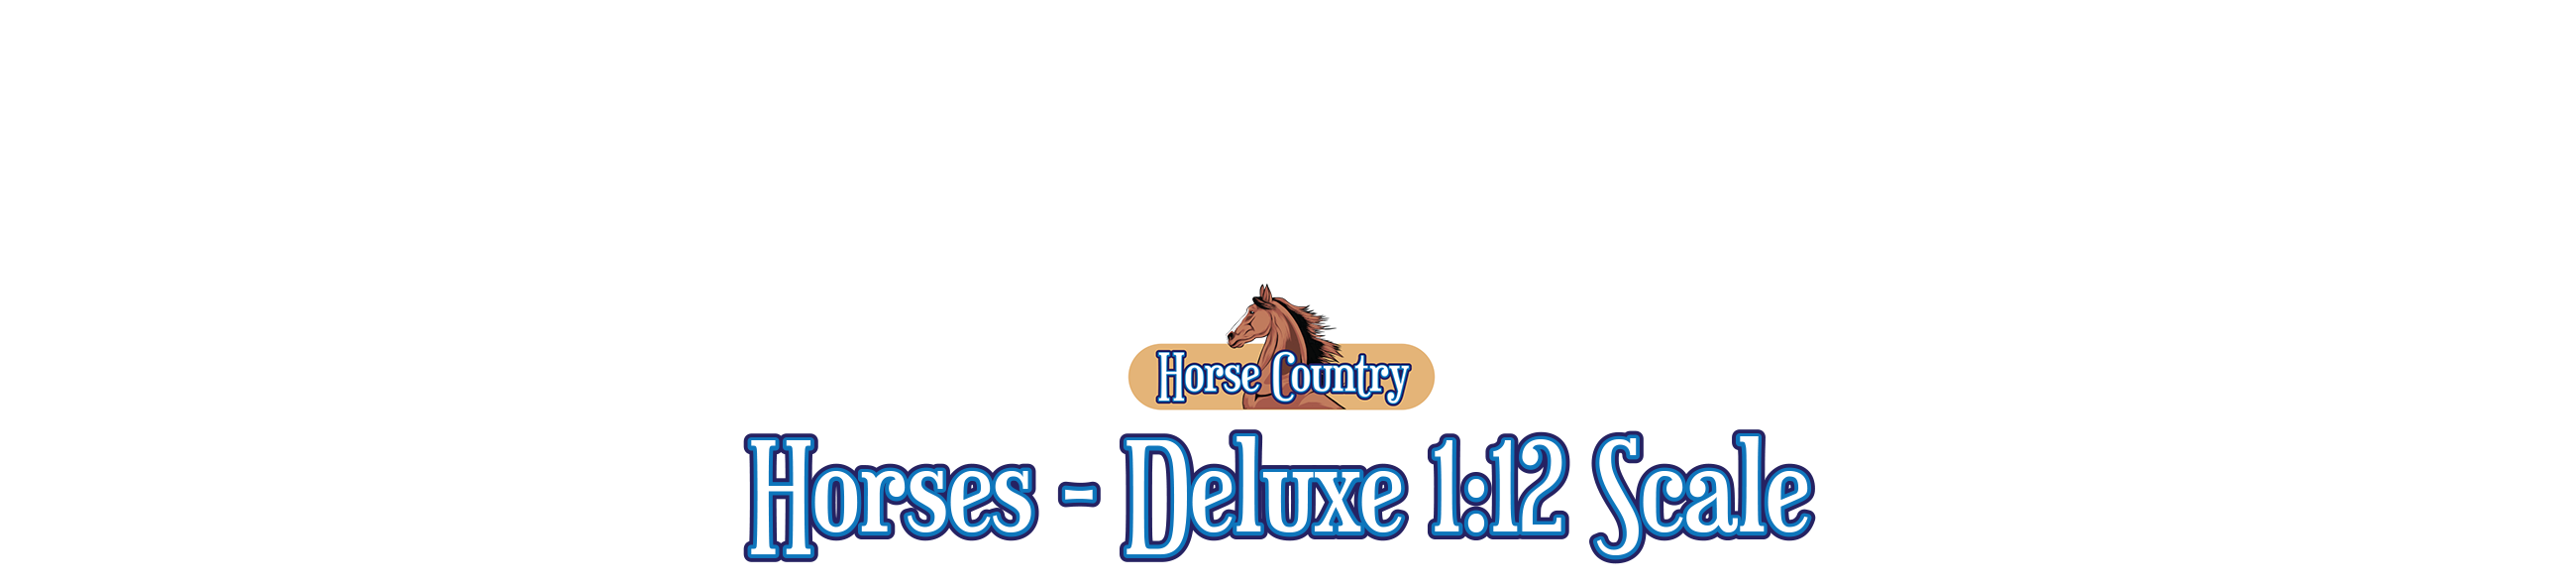 Horses - Deluxe 1:12 Scale